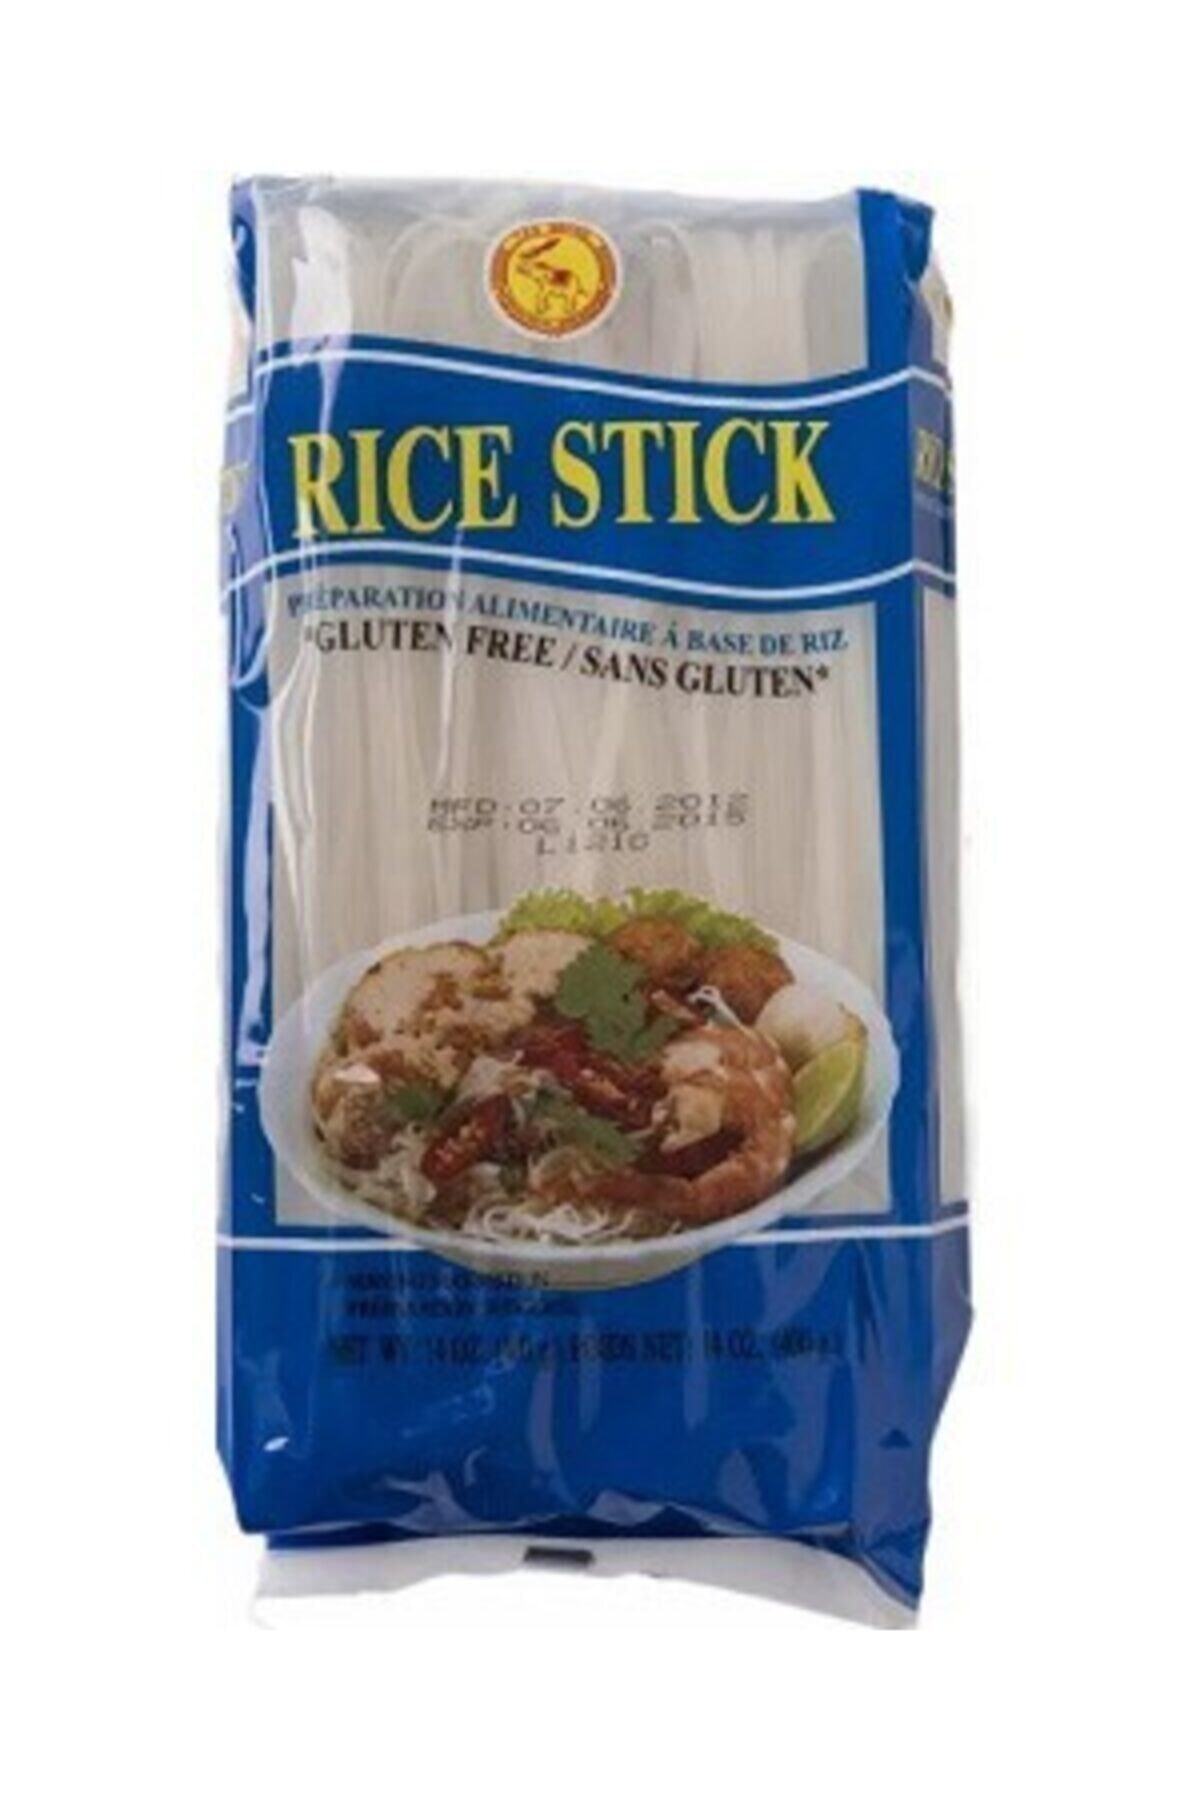 Tas Brand Rice Stick Glutensiz Makarna 400gr 2'li Set resmi